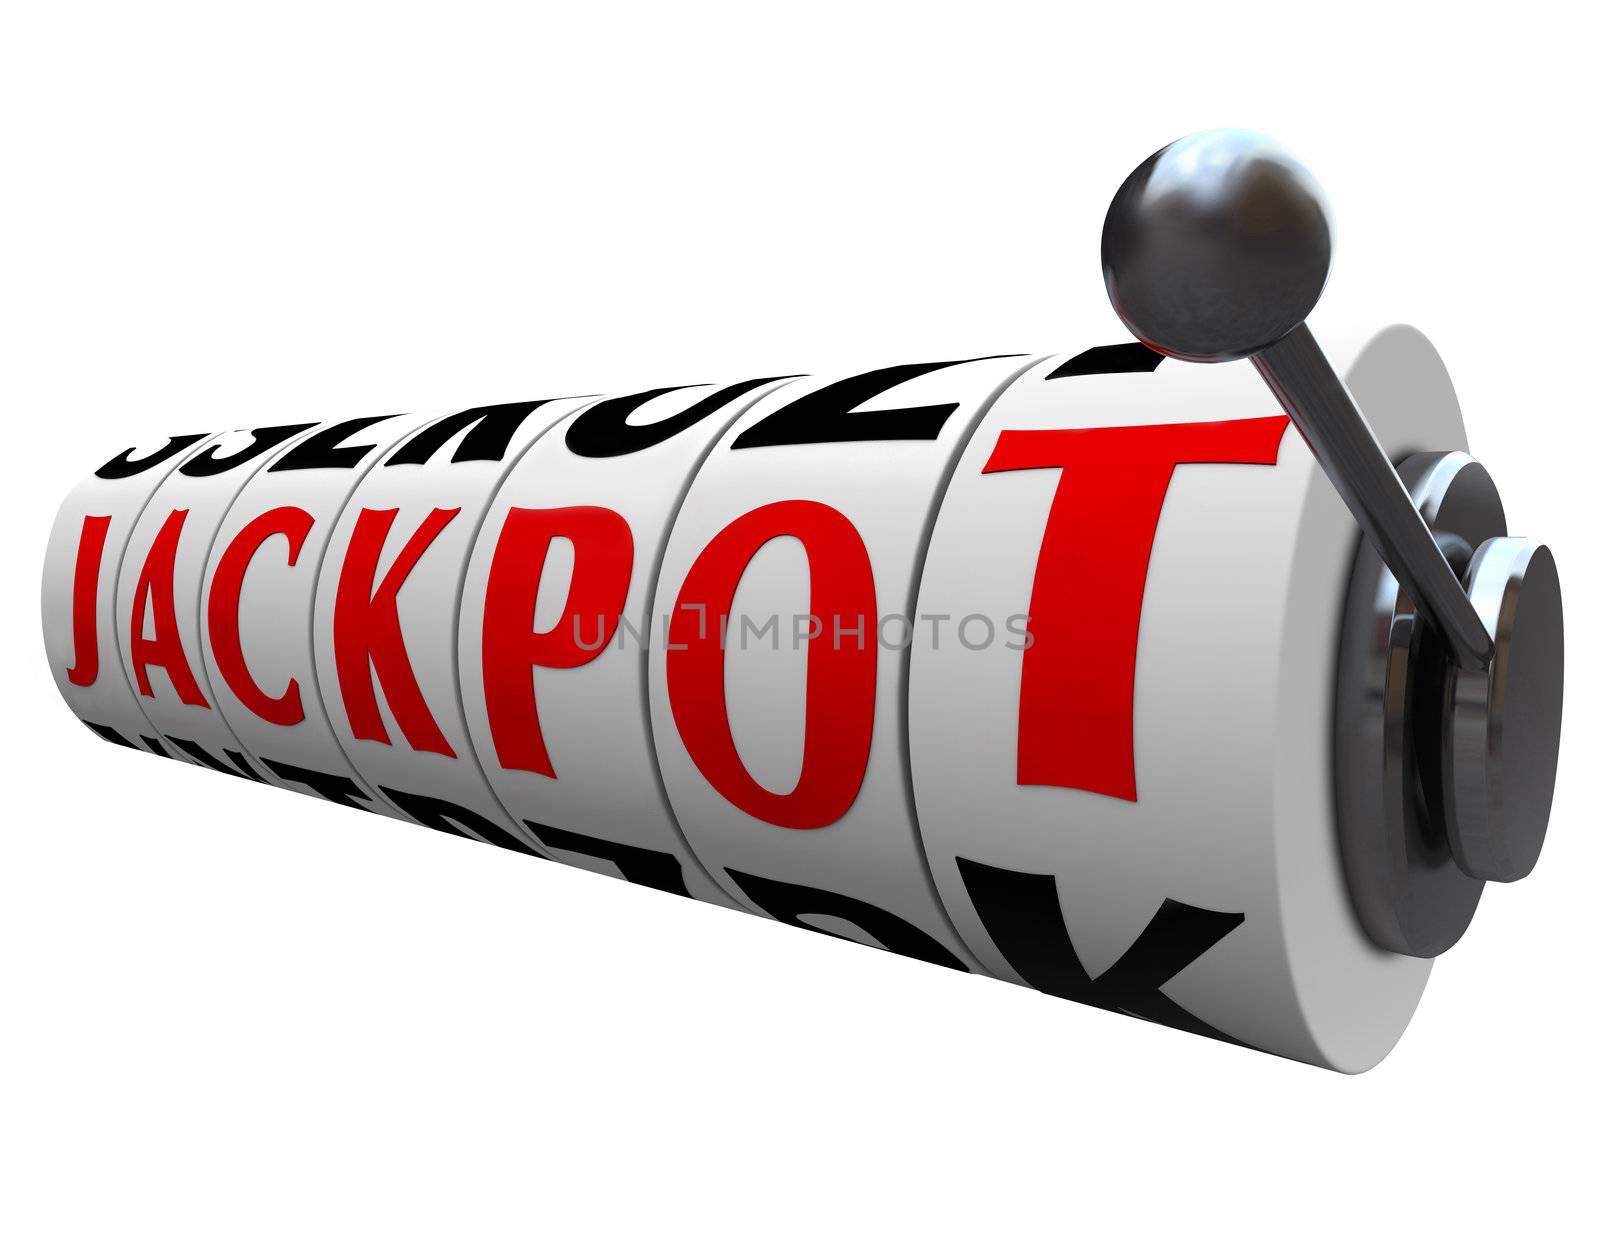 Jackpot Word Slot Machine Wheels Money Payout by iQoncept